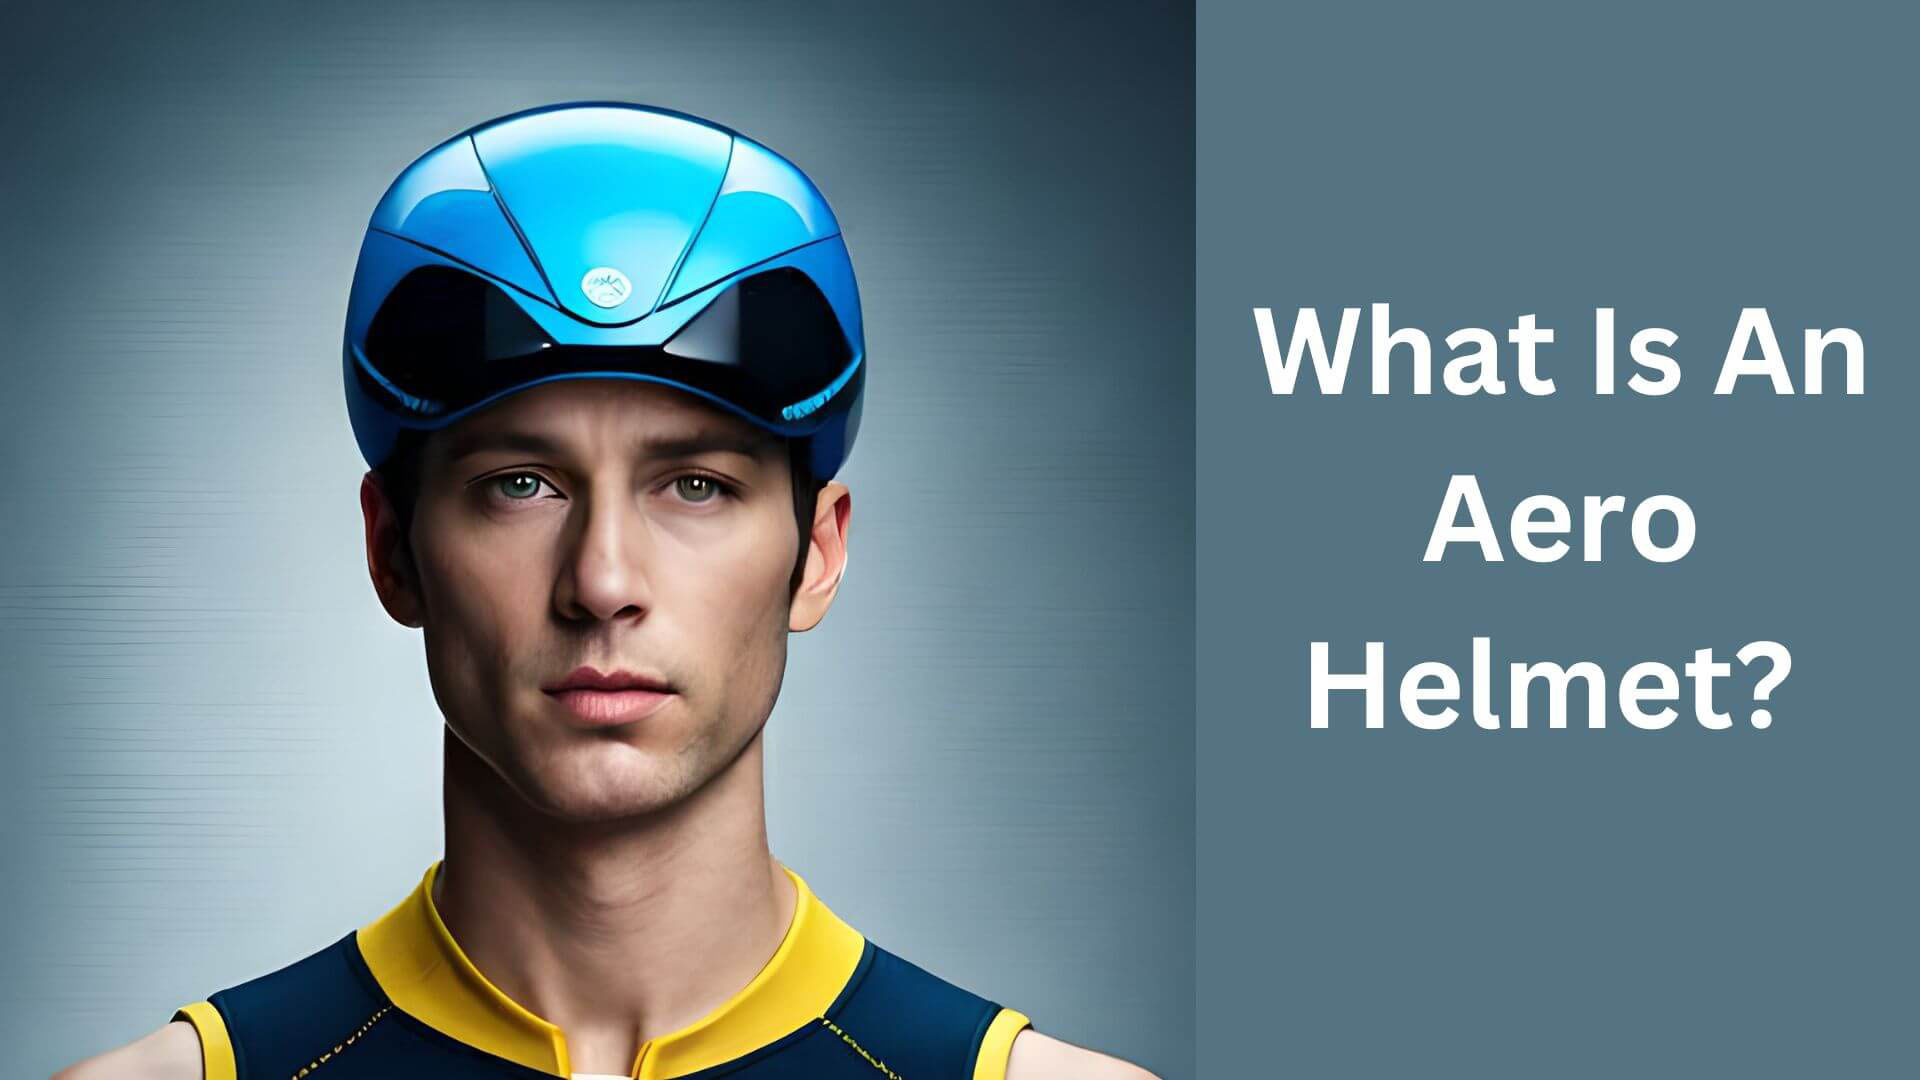 What Is An Aero Helmet?